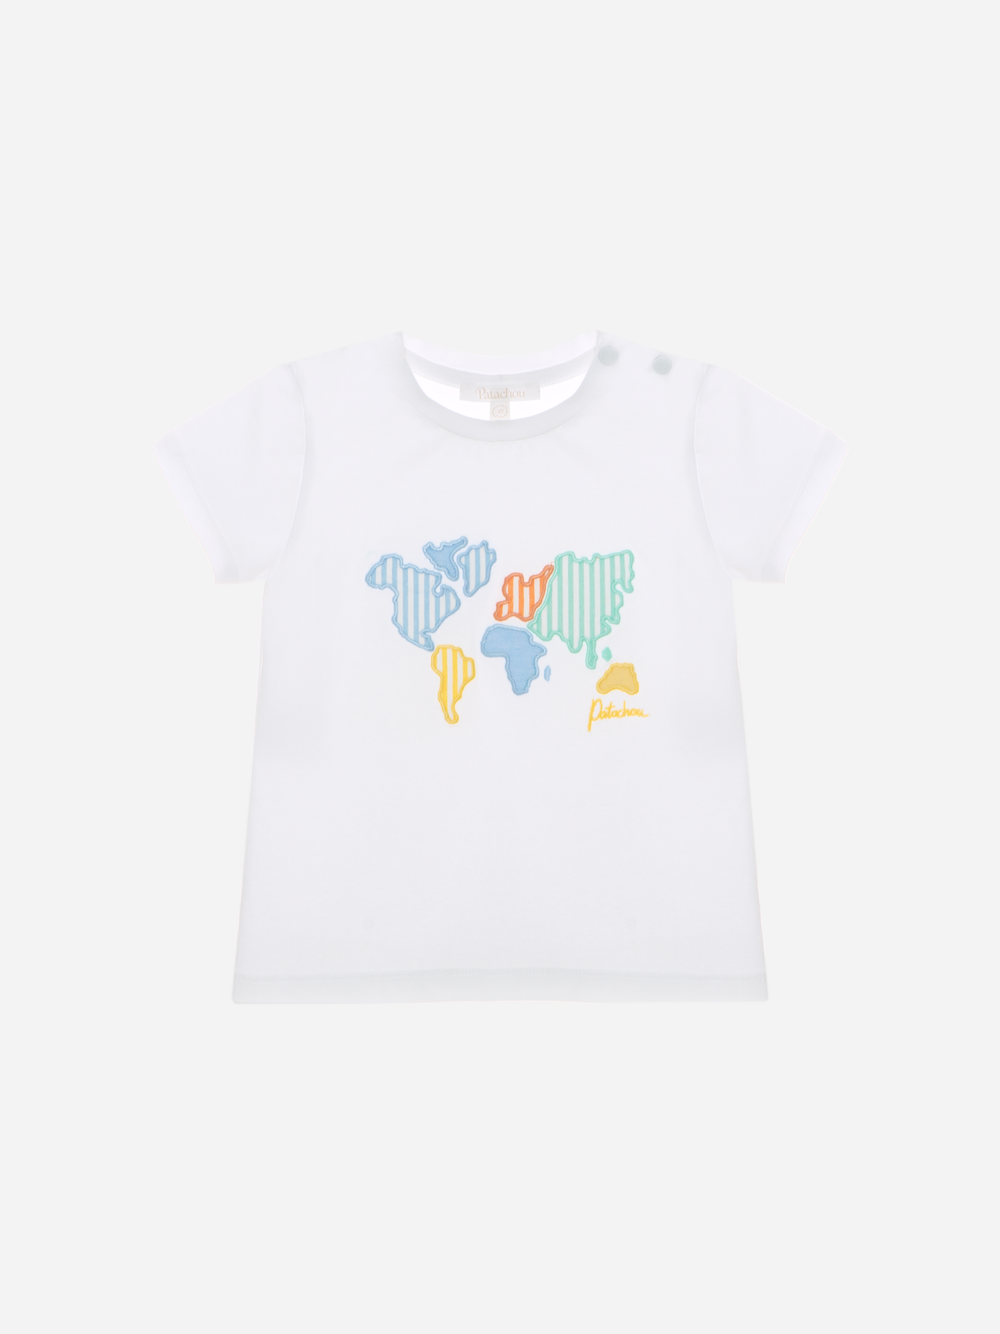 T-shirt branca com mapa-múndi multicolor